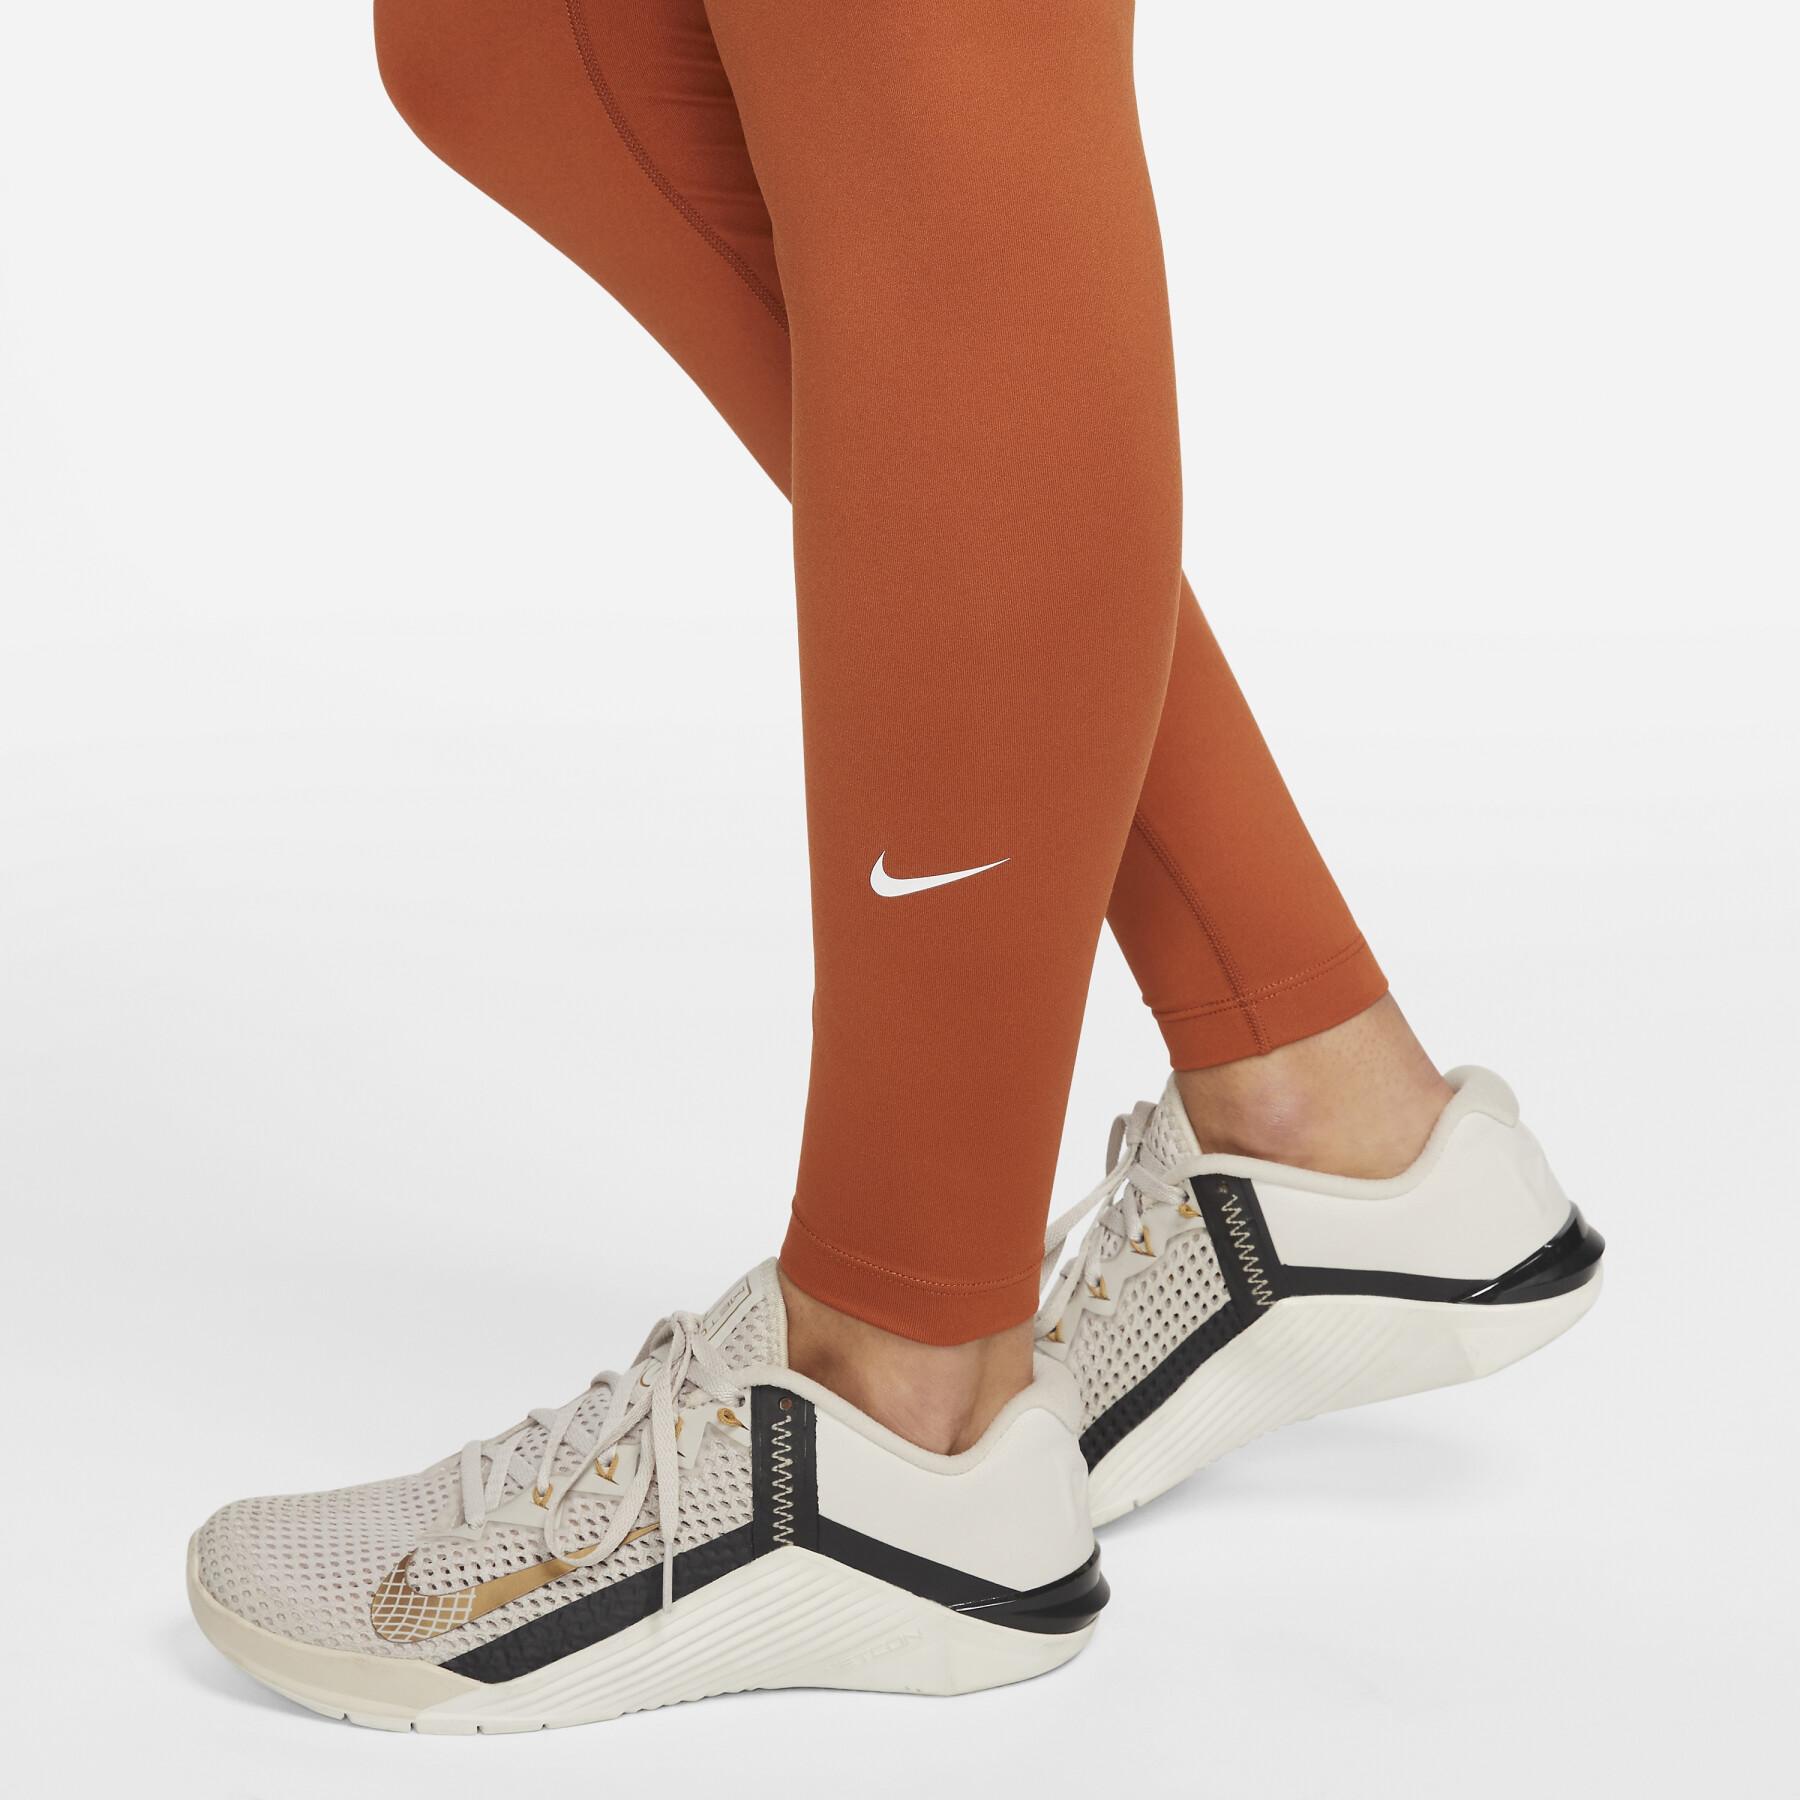 Legging kobieta Nike One